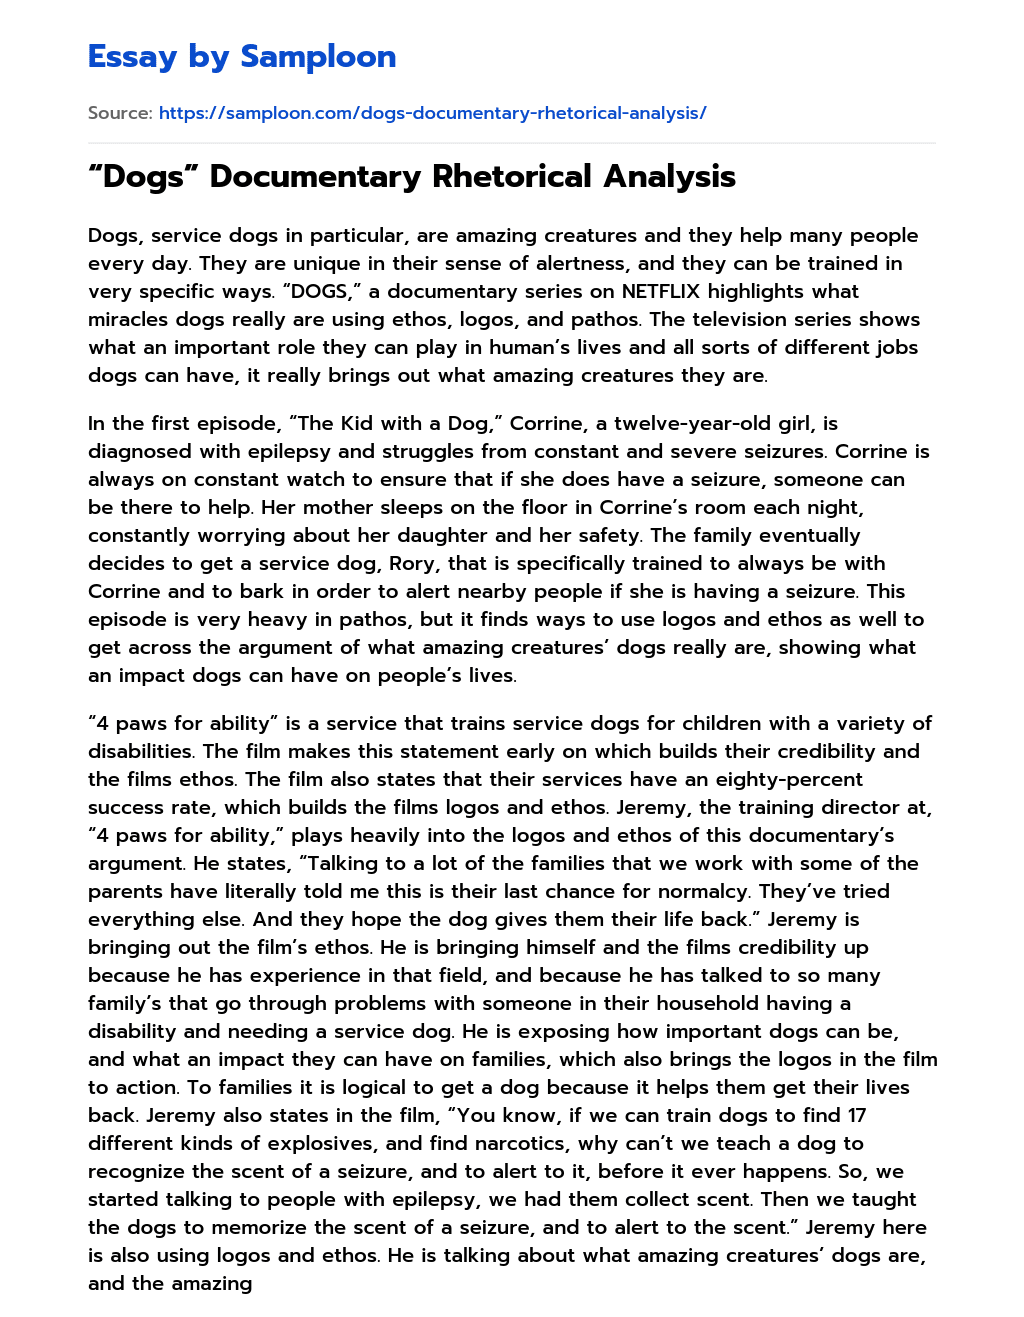 “Dogs” Documentary Rhetorical Analysis essay